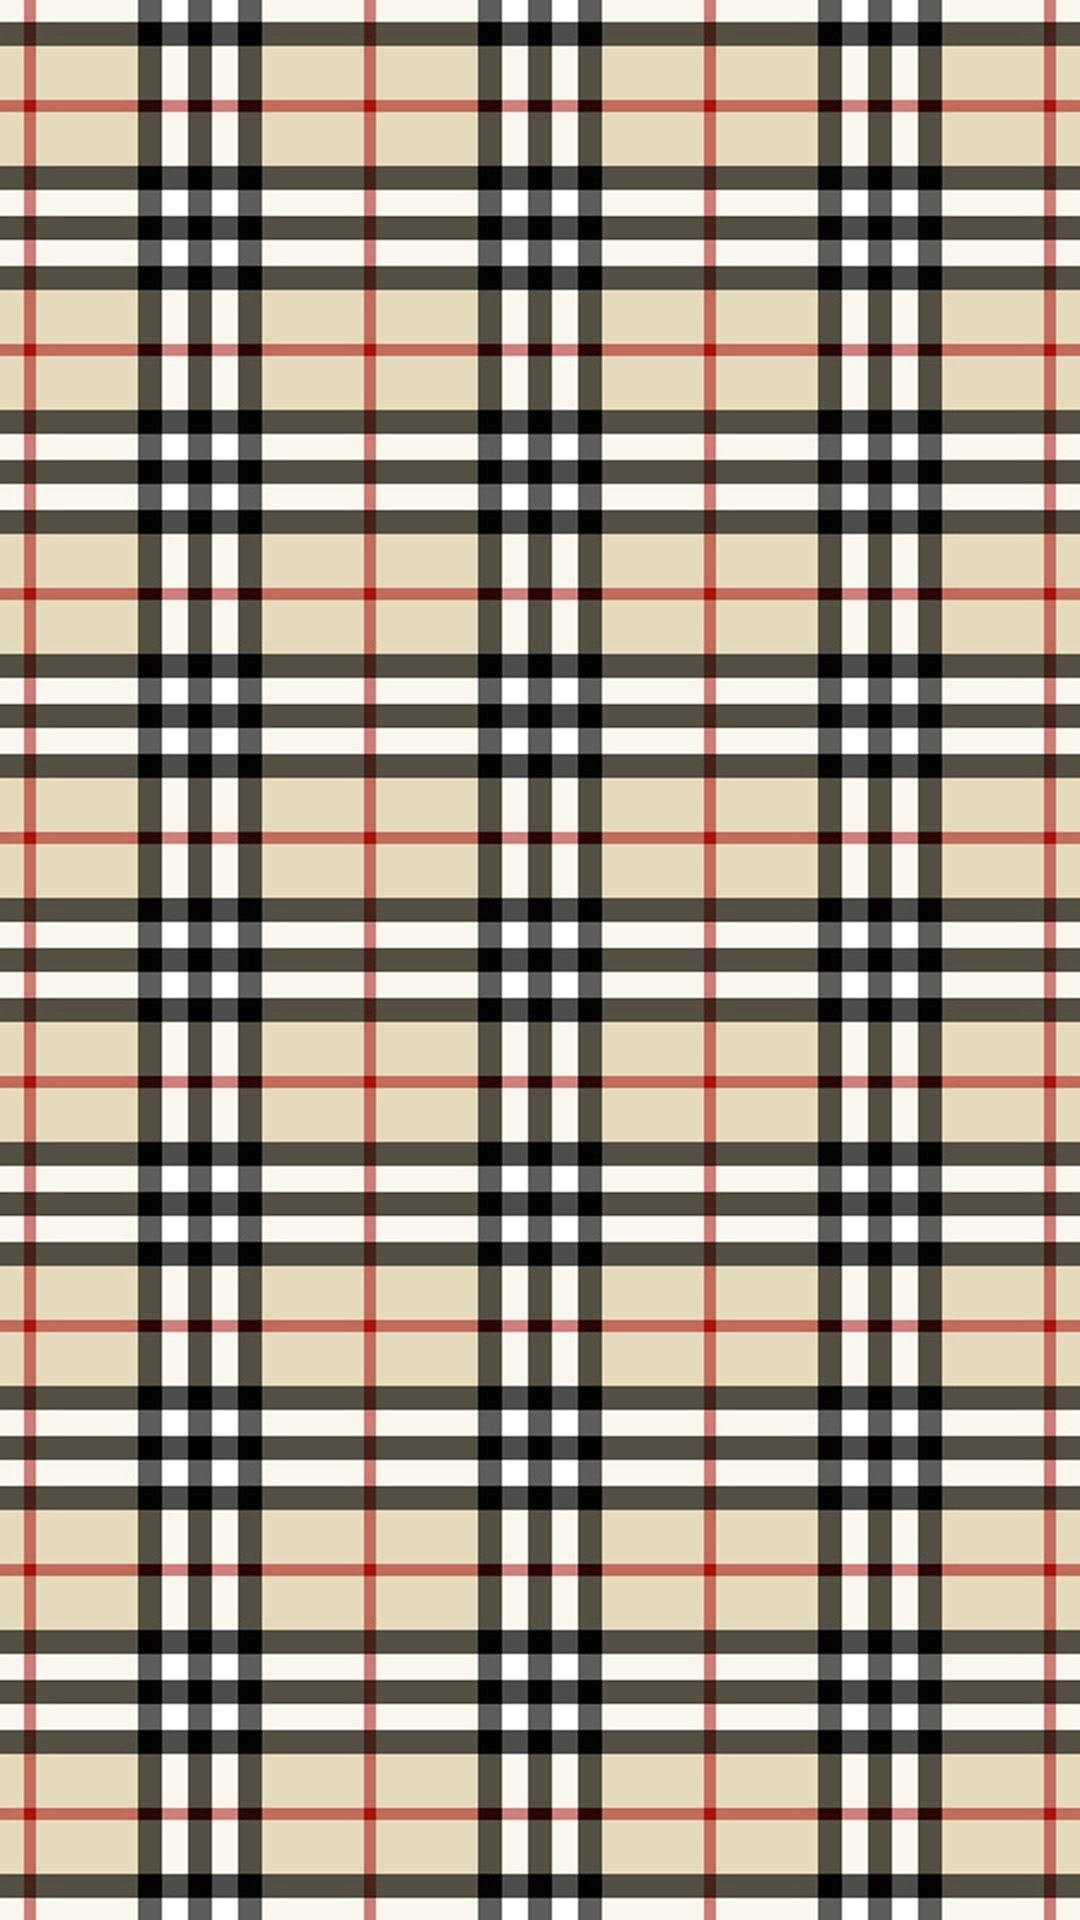 Burberry: The iconic pattern, Popular among the British elite, A status symbol. 1080x1920 Full HD Wallpaper.